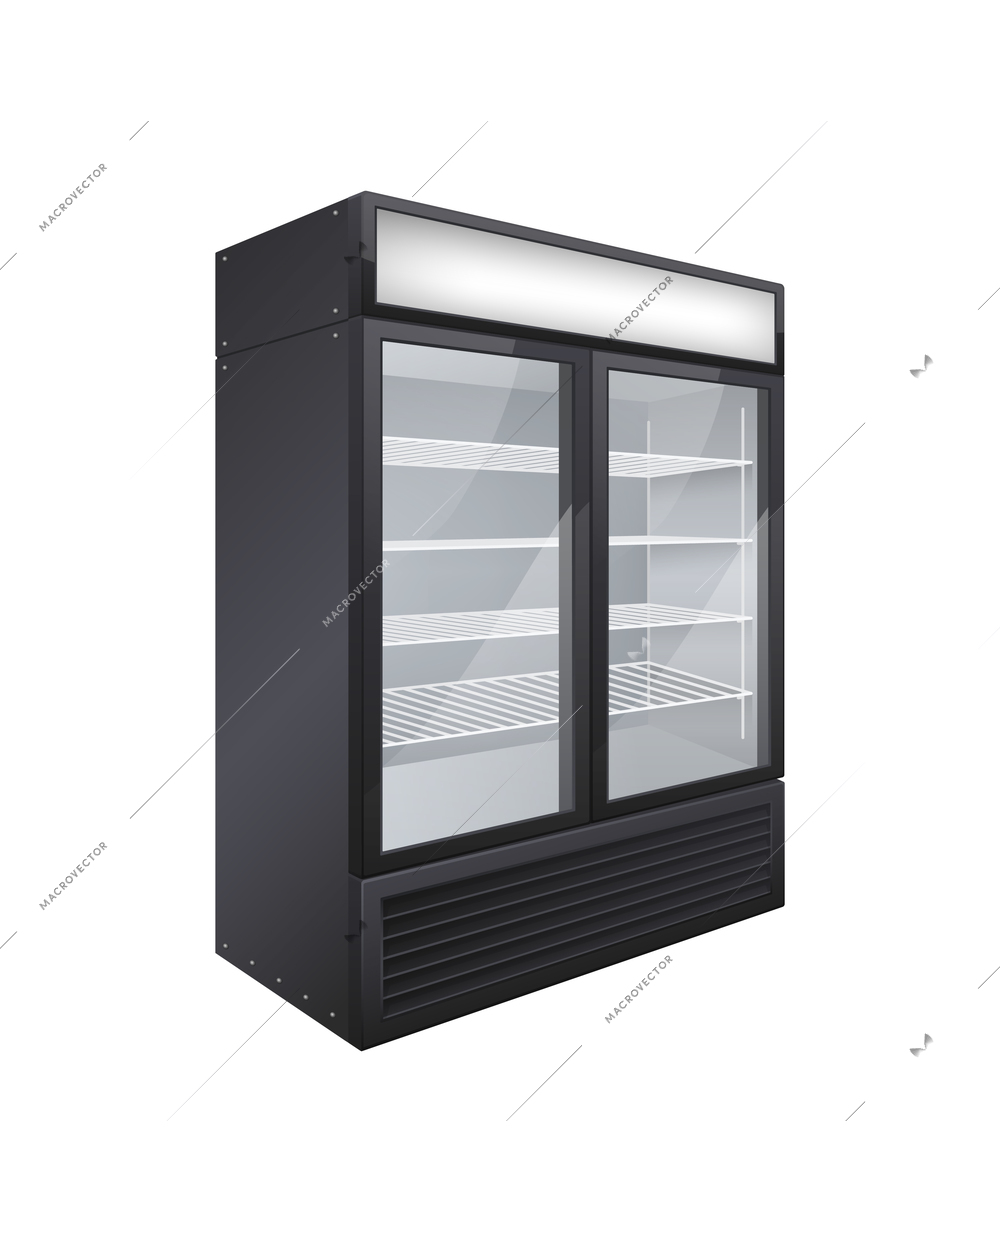 Commercial glass door drink fridge realistic composition with isolated image of double door shop fridge vector illustration